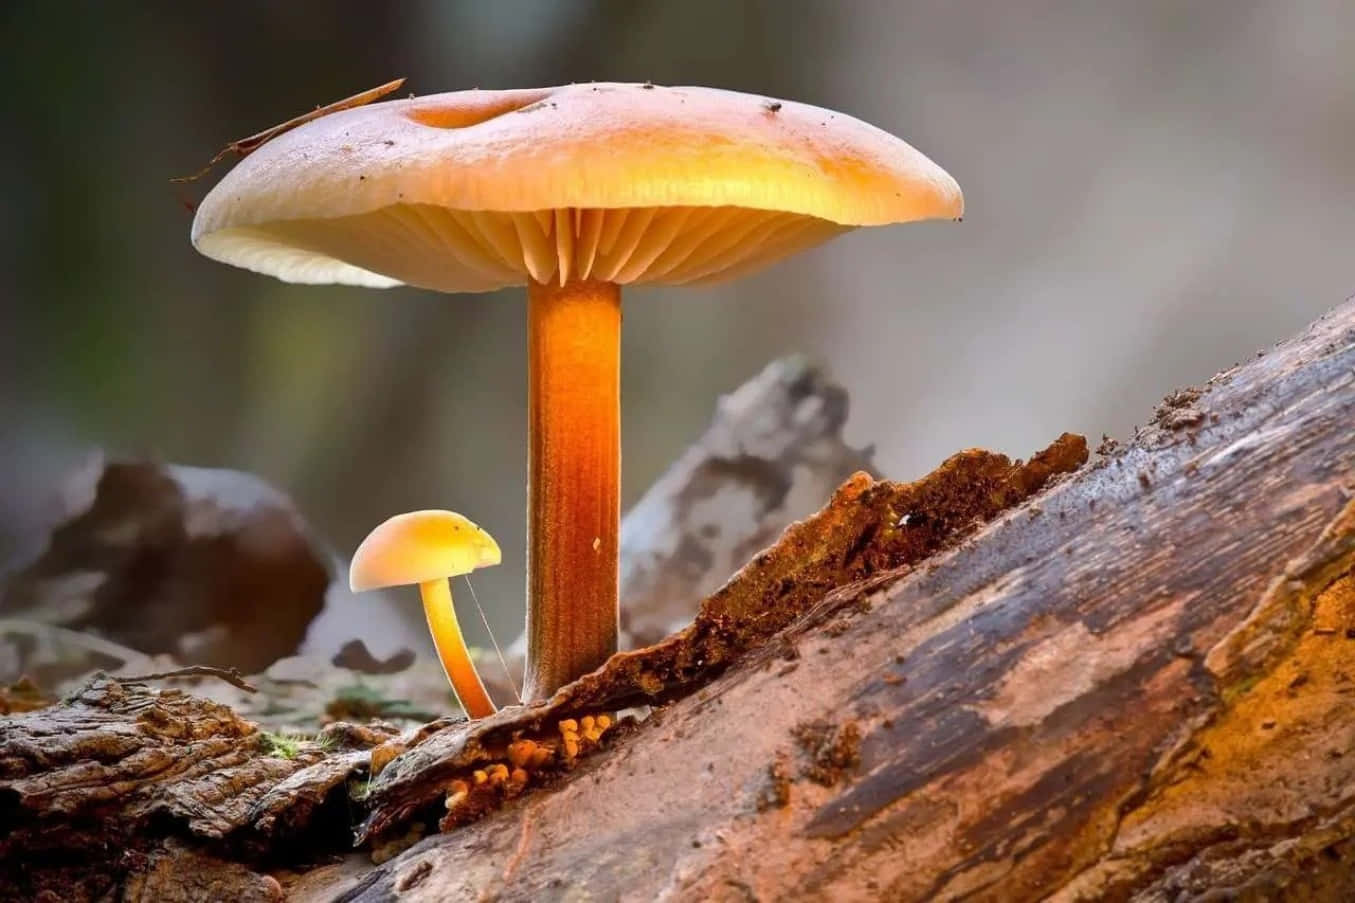 A vibrant and exotic Magic Mushroom in all its splendor